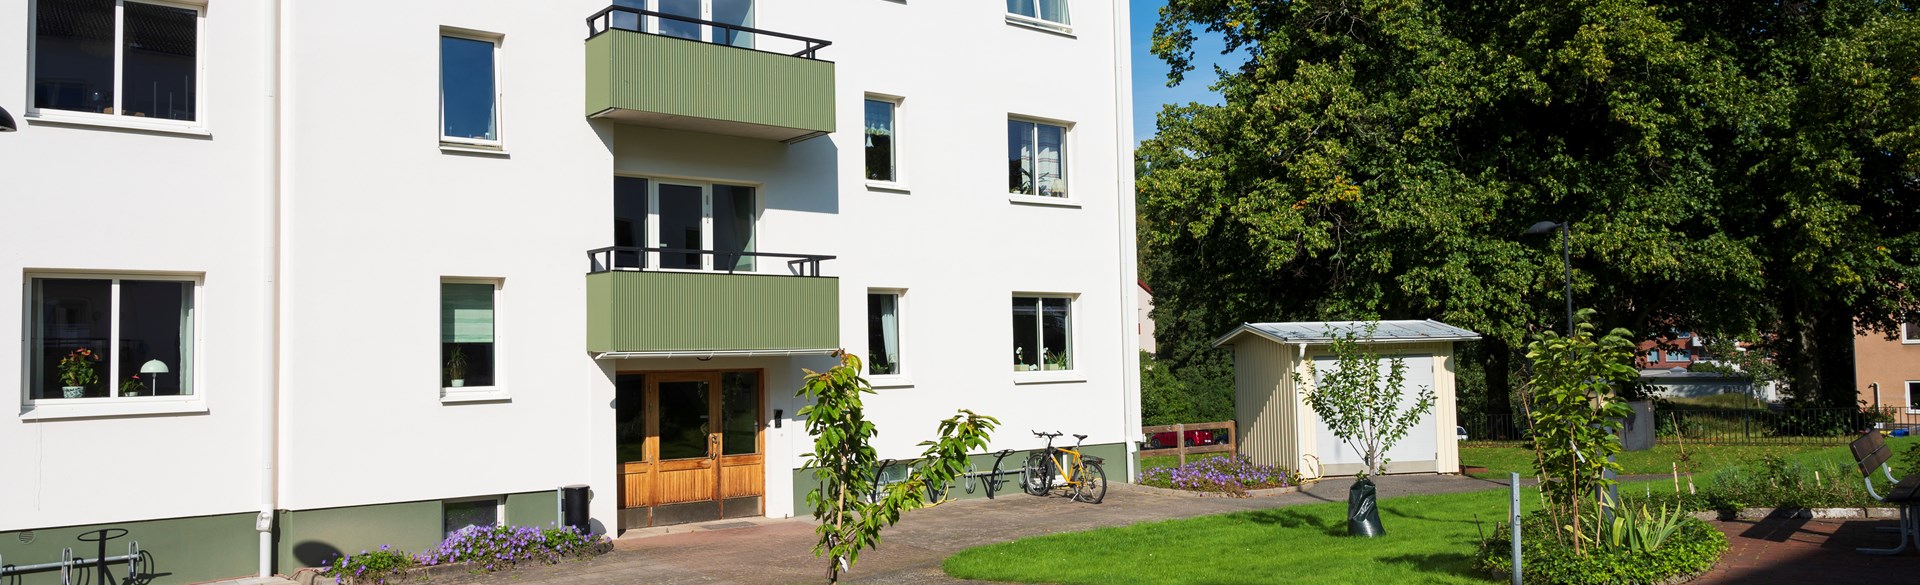 Vitt flerbostadshus med gröna balkonger